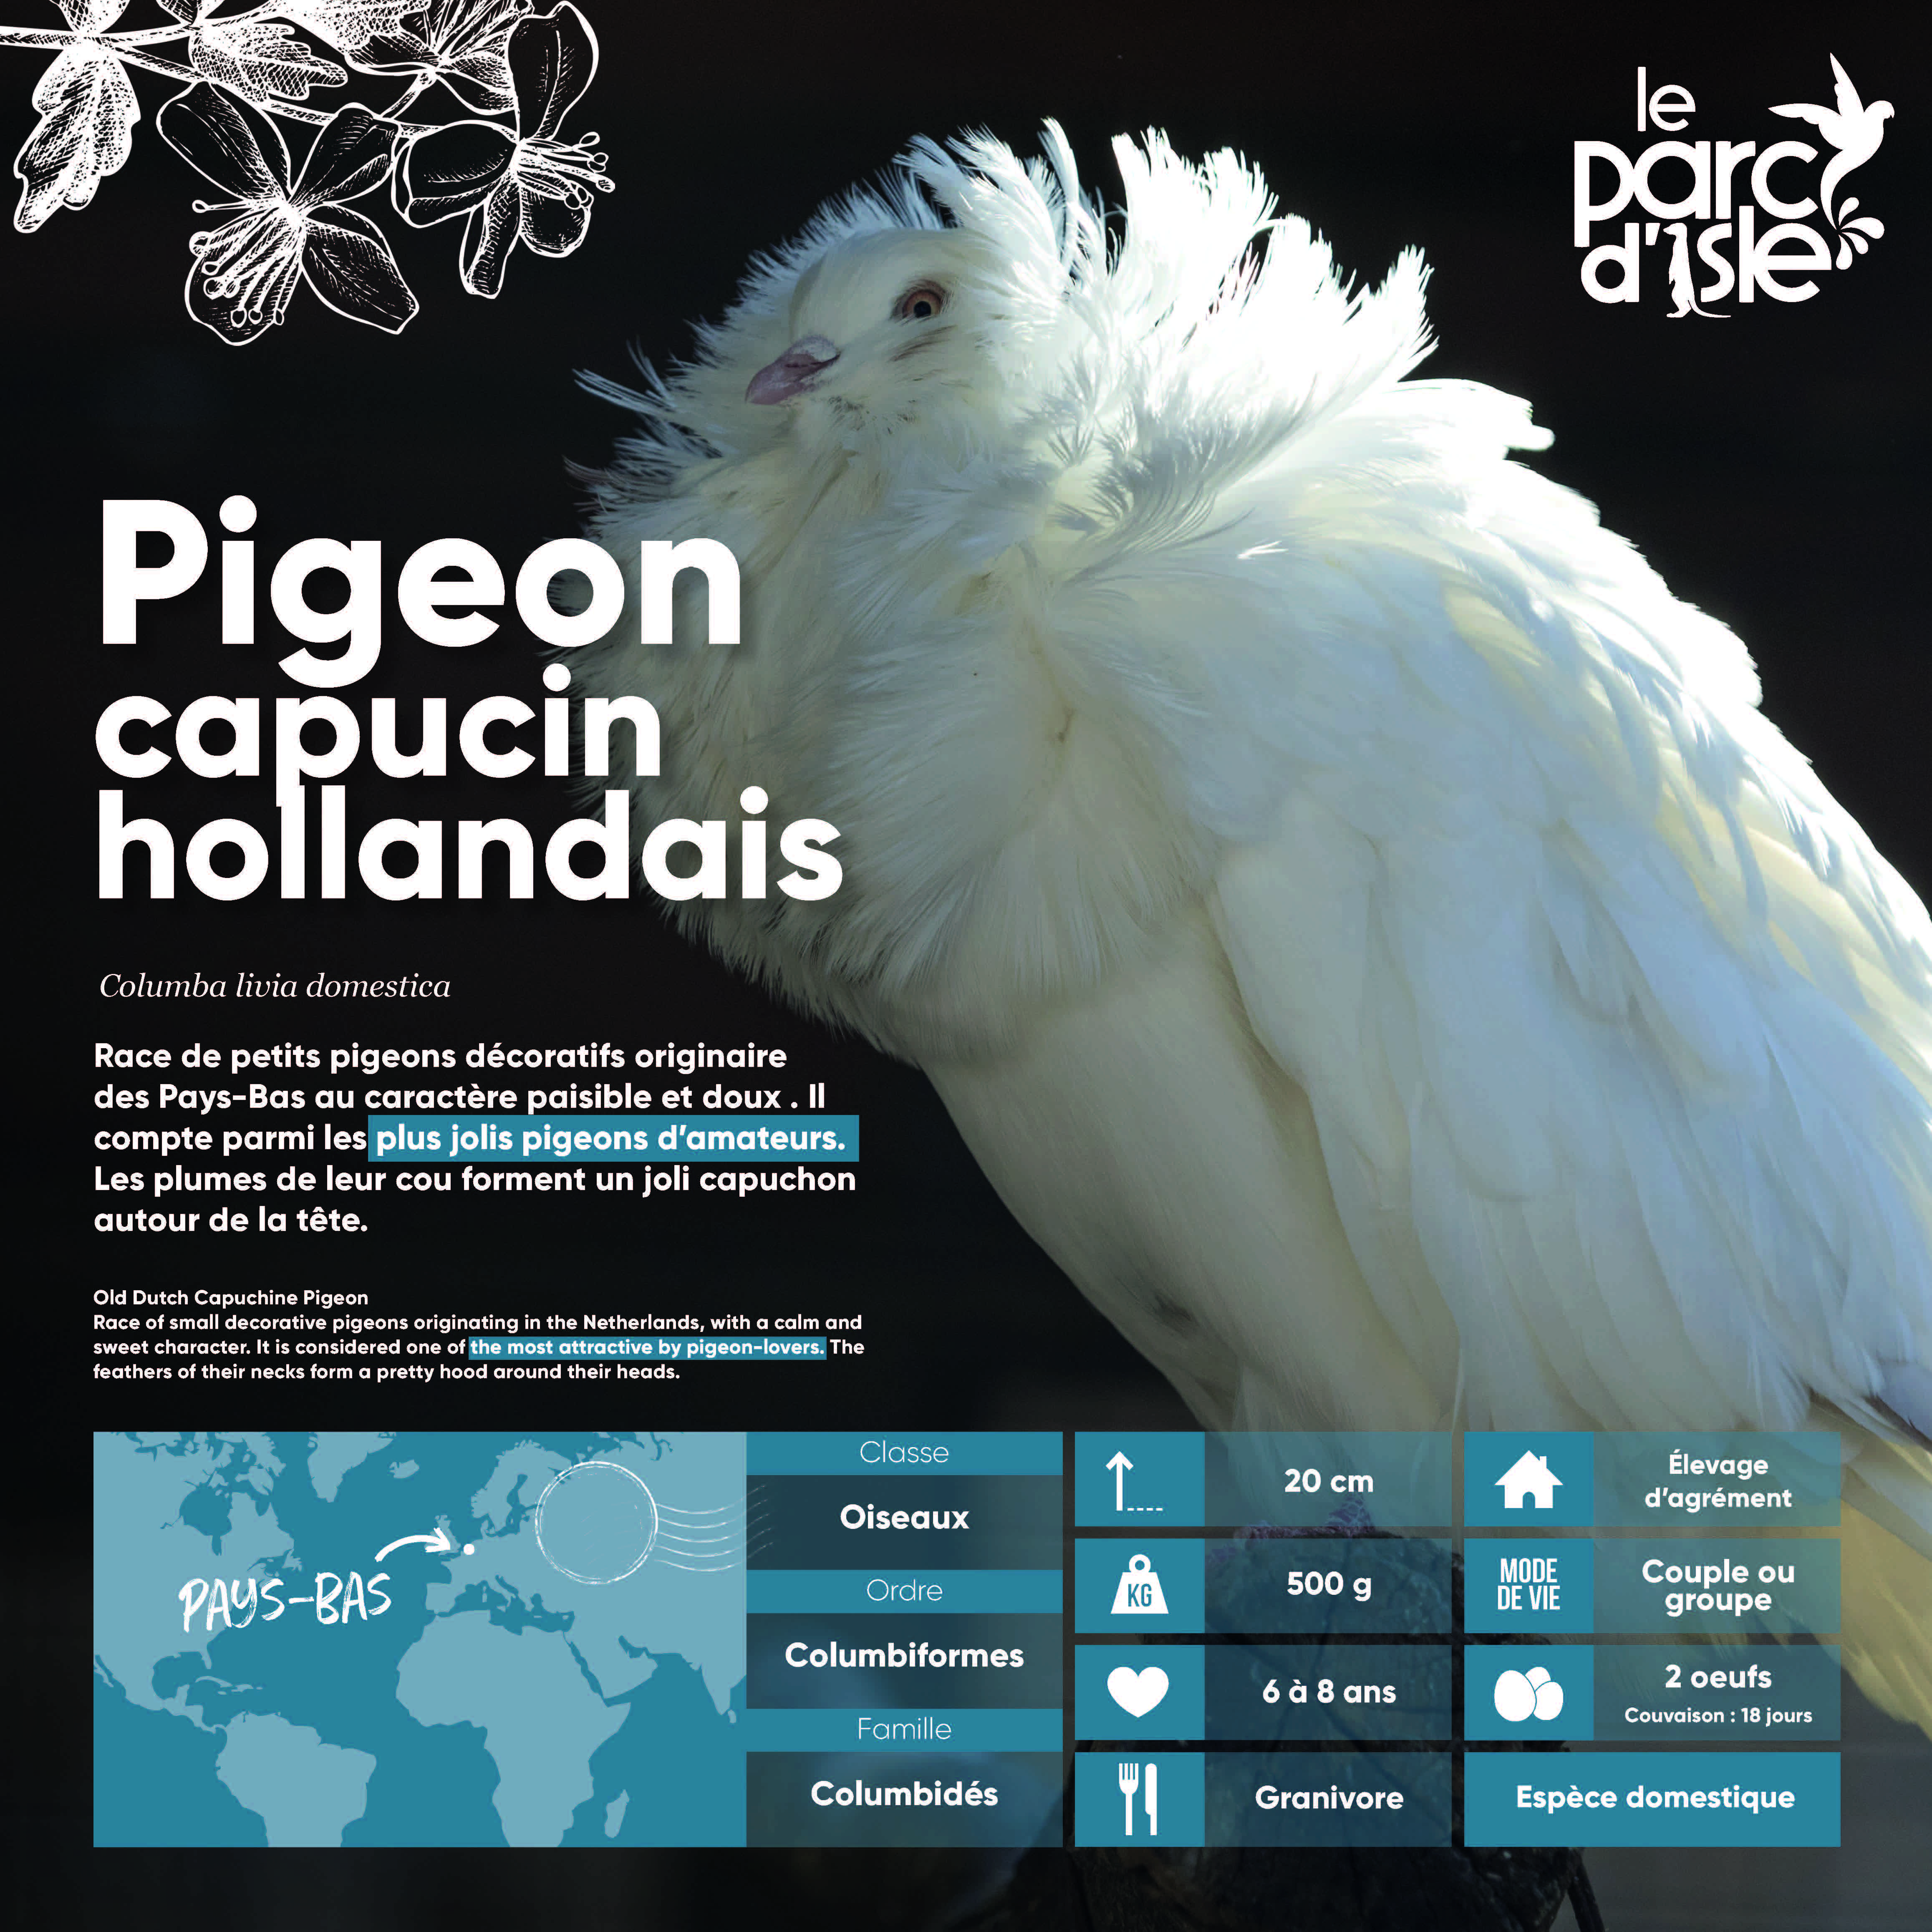 Pigeon capucin hollandais - Agrandir l'image, .JPG 1,43Mo (fenêtre modale)